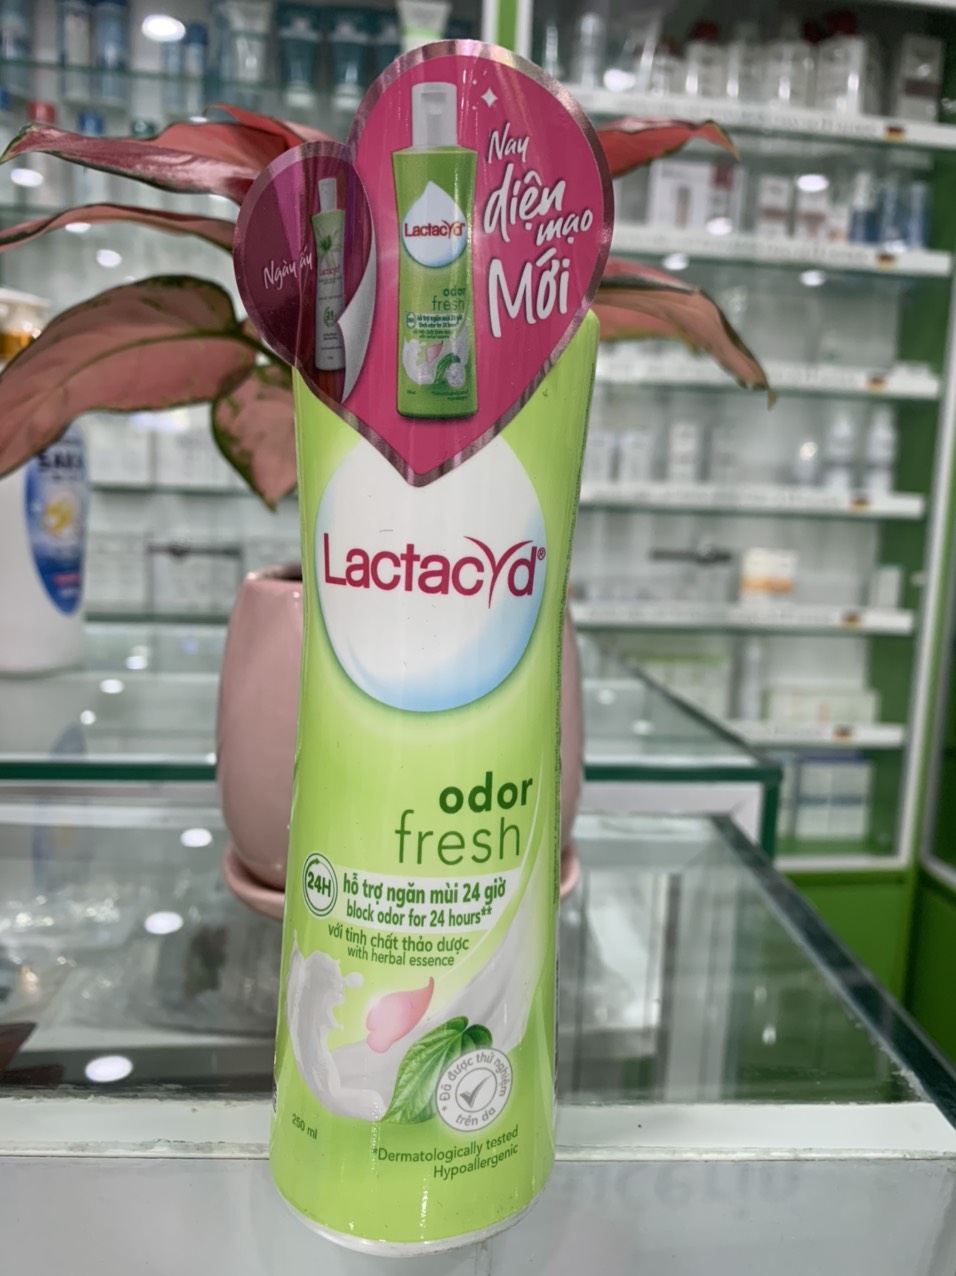 Lactacyd odor fresh- Dung dịch vệ sinh phụ nữ